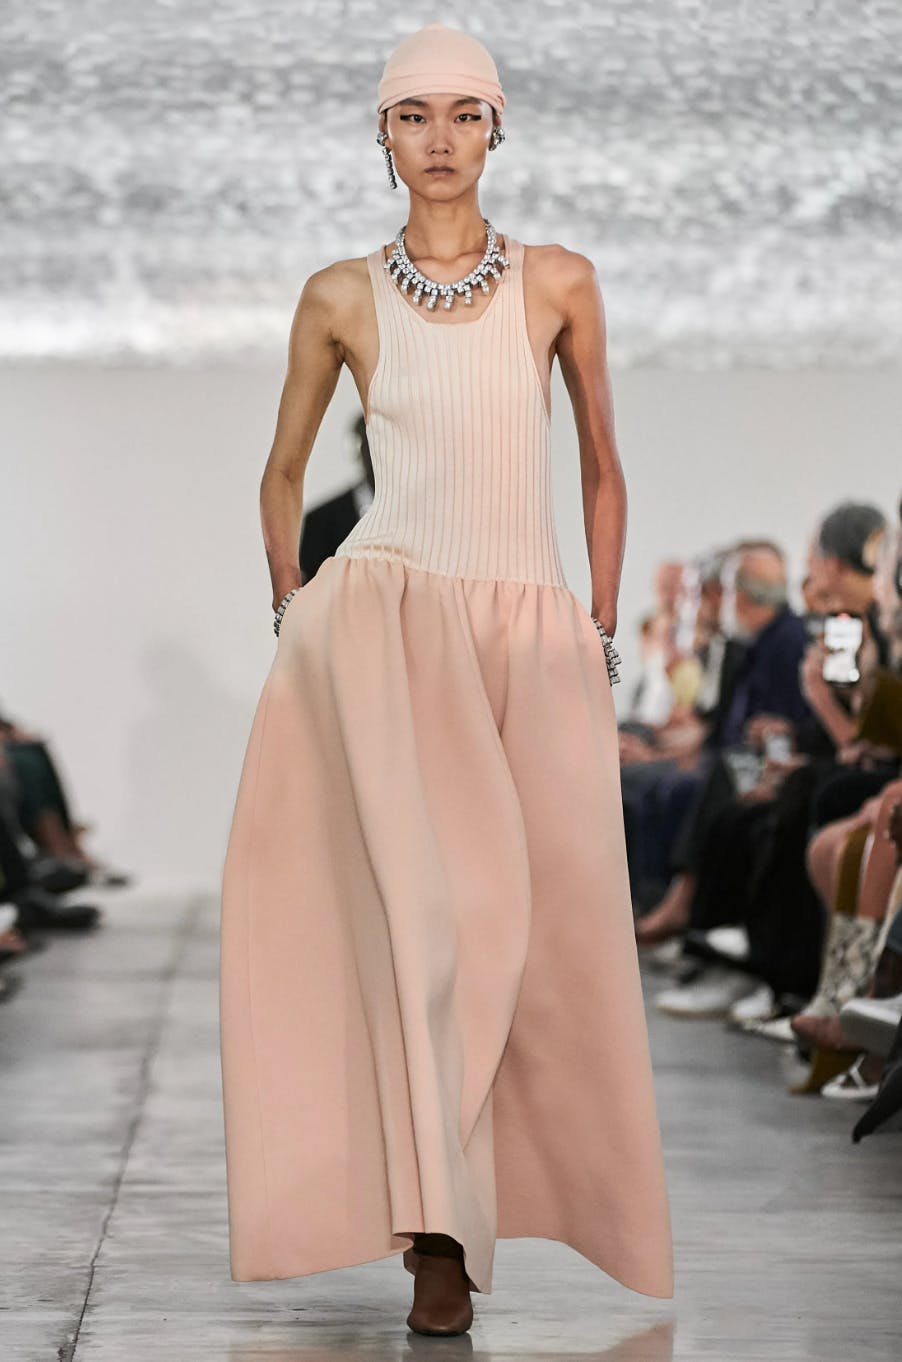 model on runway wearing peach colored dress